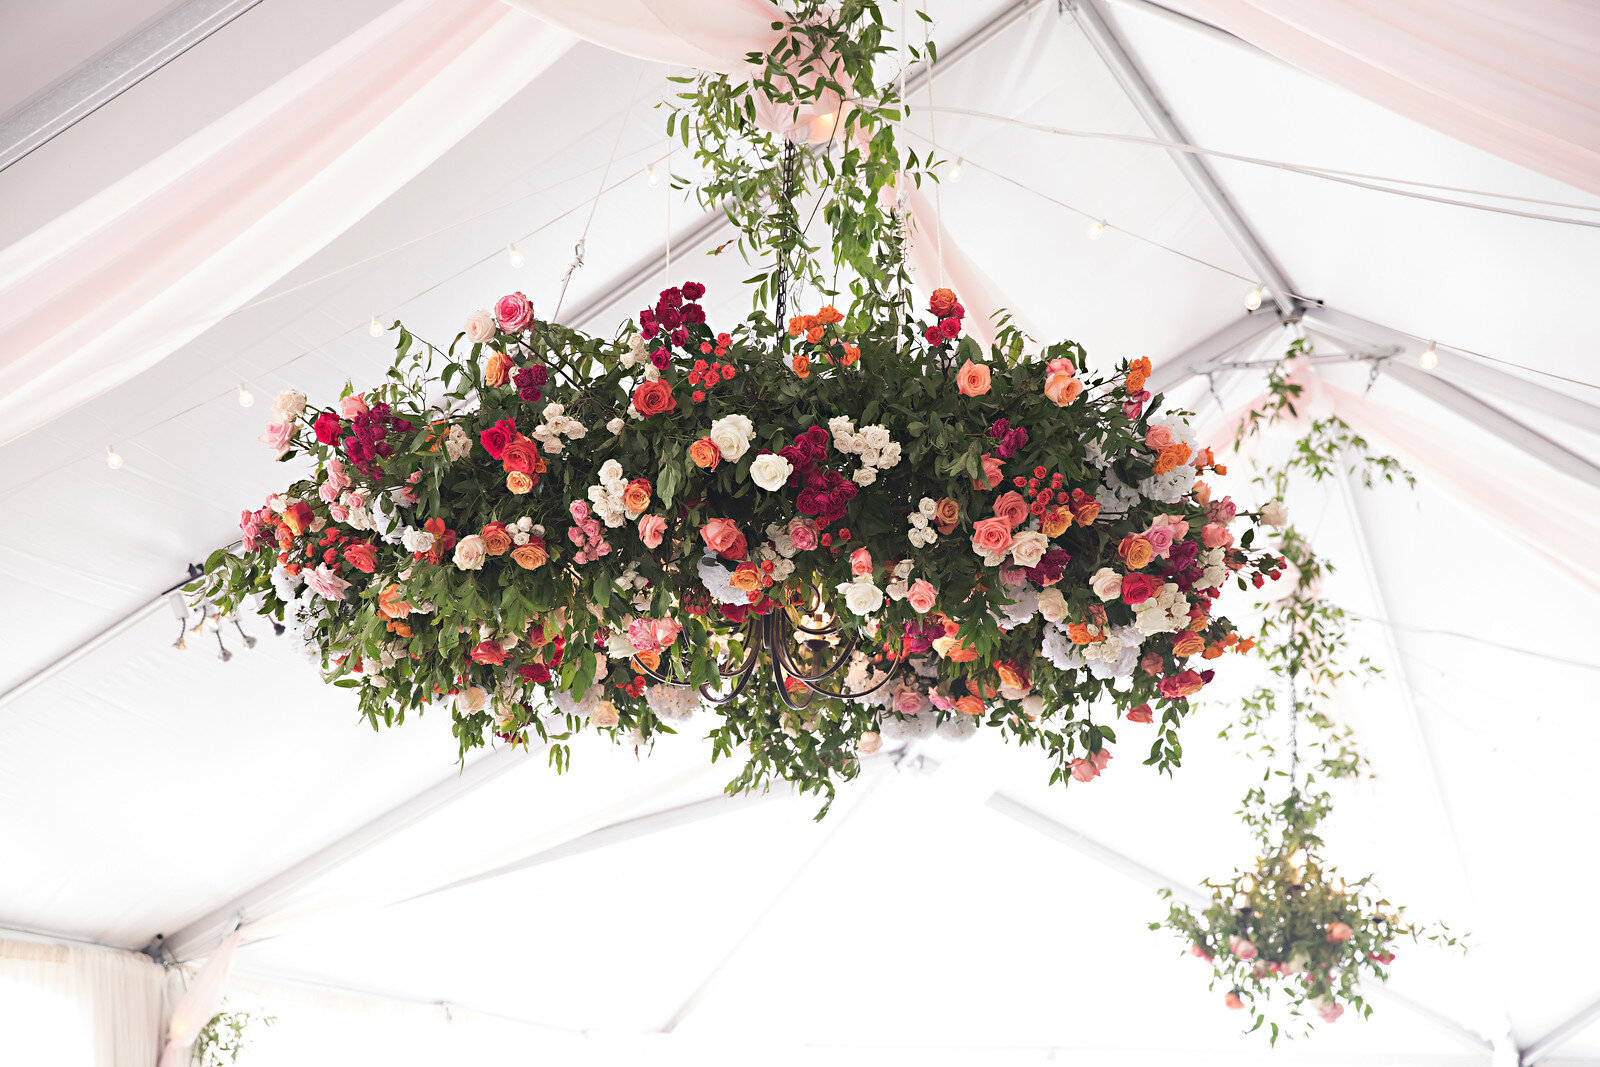 Ceiling flower installation wedding reception 